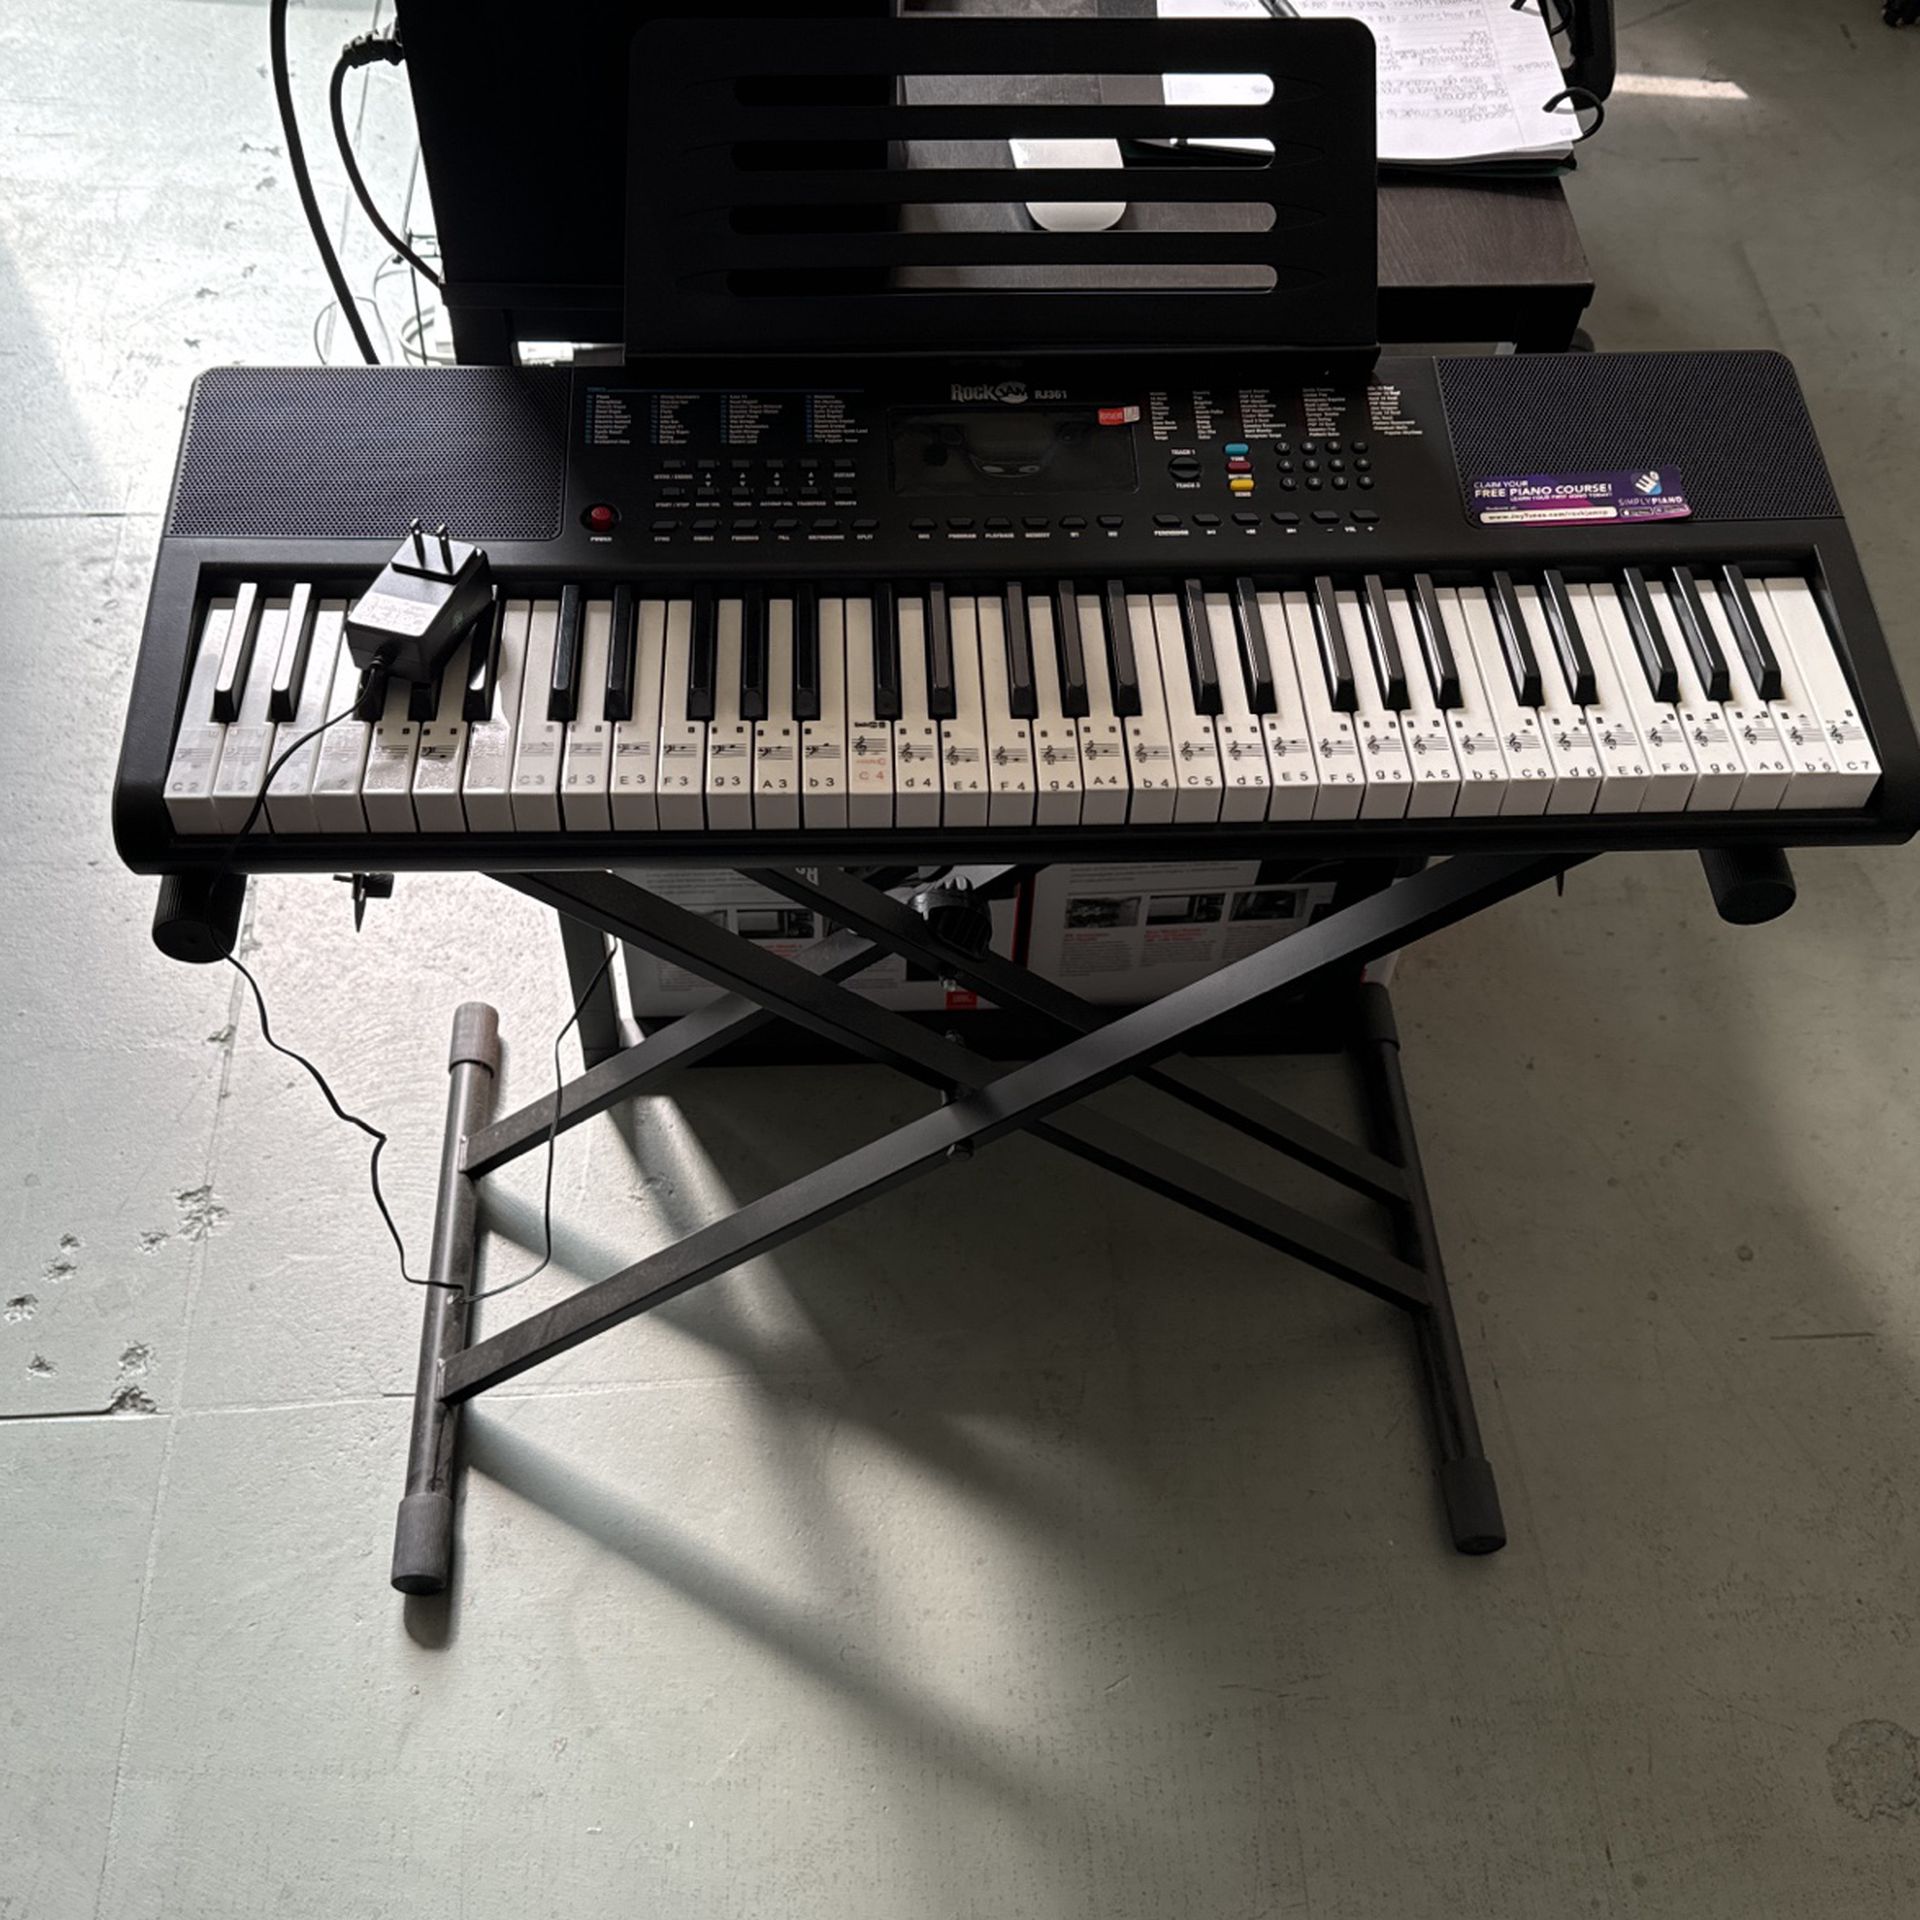 Rockjam (RJ361) Digital Piano/keyboard